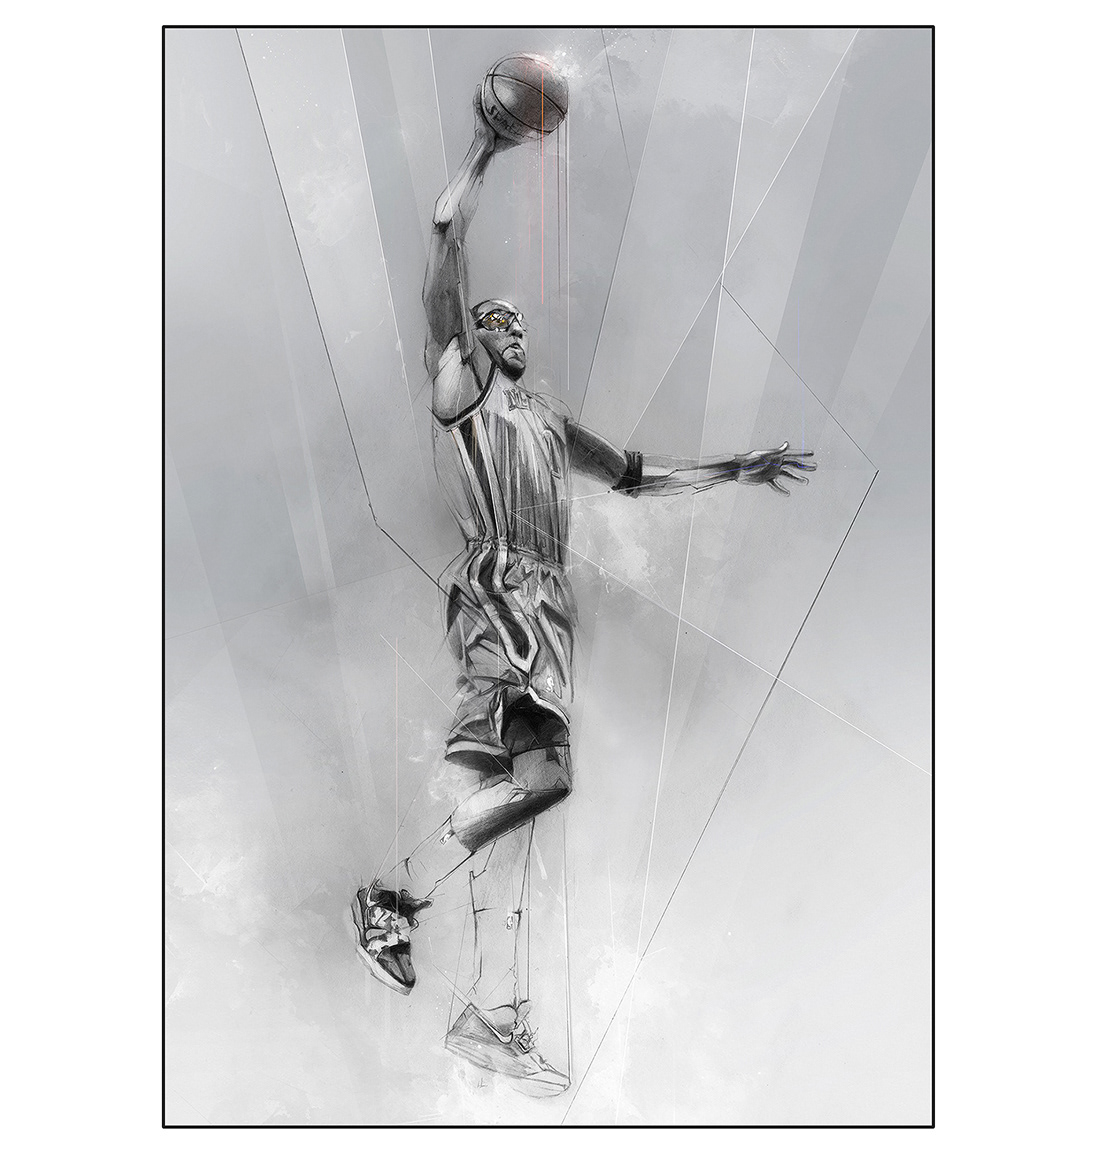 alexis Marcou Nike Foot Locker NBA house of hoops LeBron James Kobe Bryant Rajon Rondo kevin durant Chris Paul Carmelo Anthony Blake Griffin dwyane wade